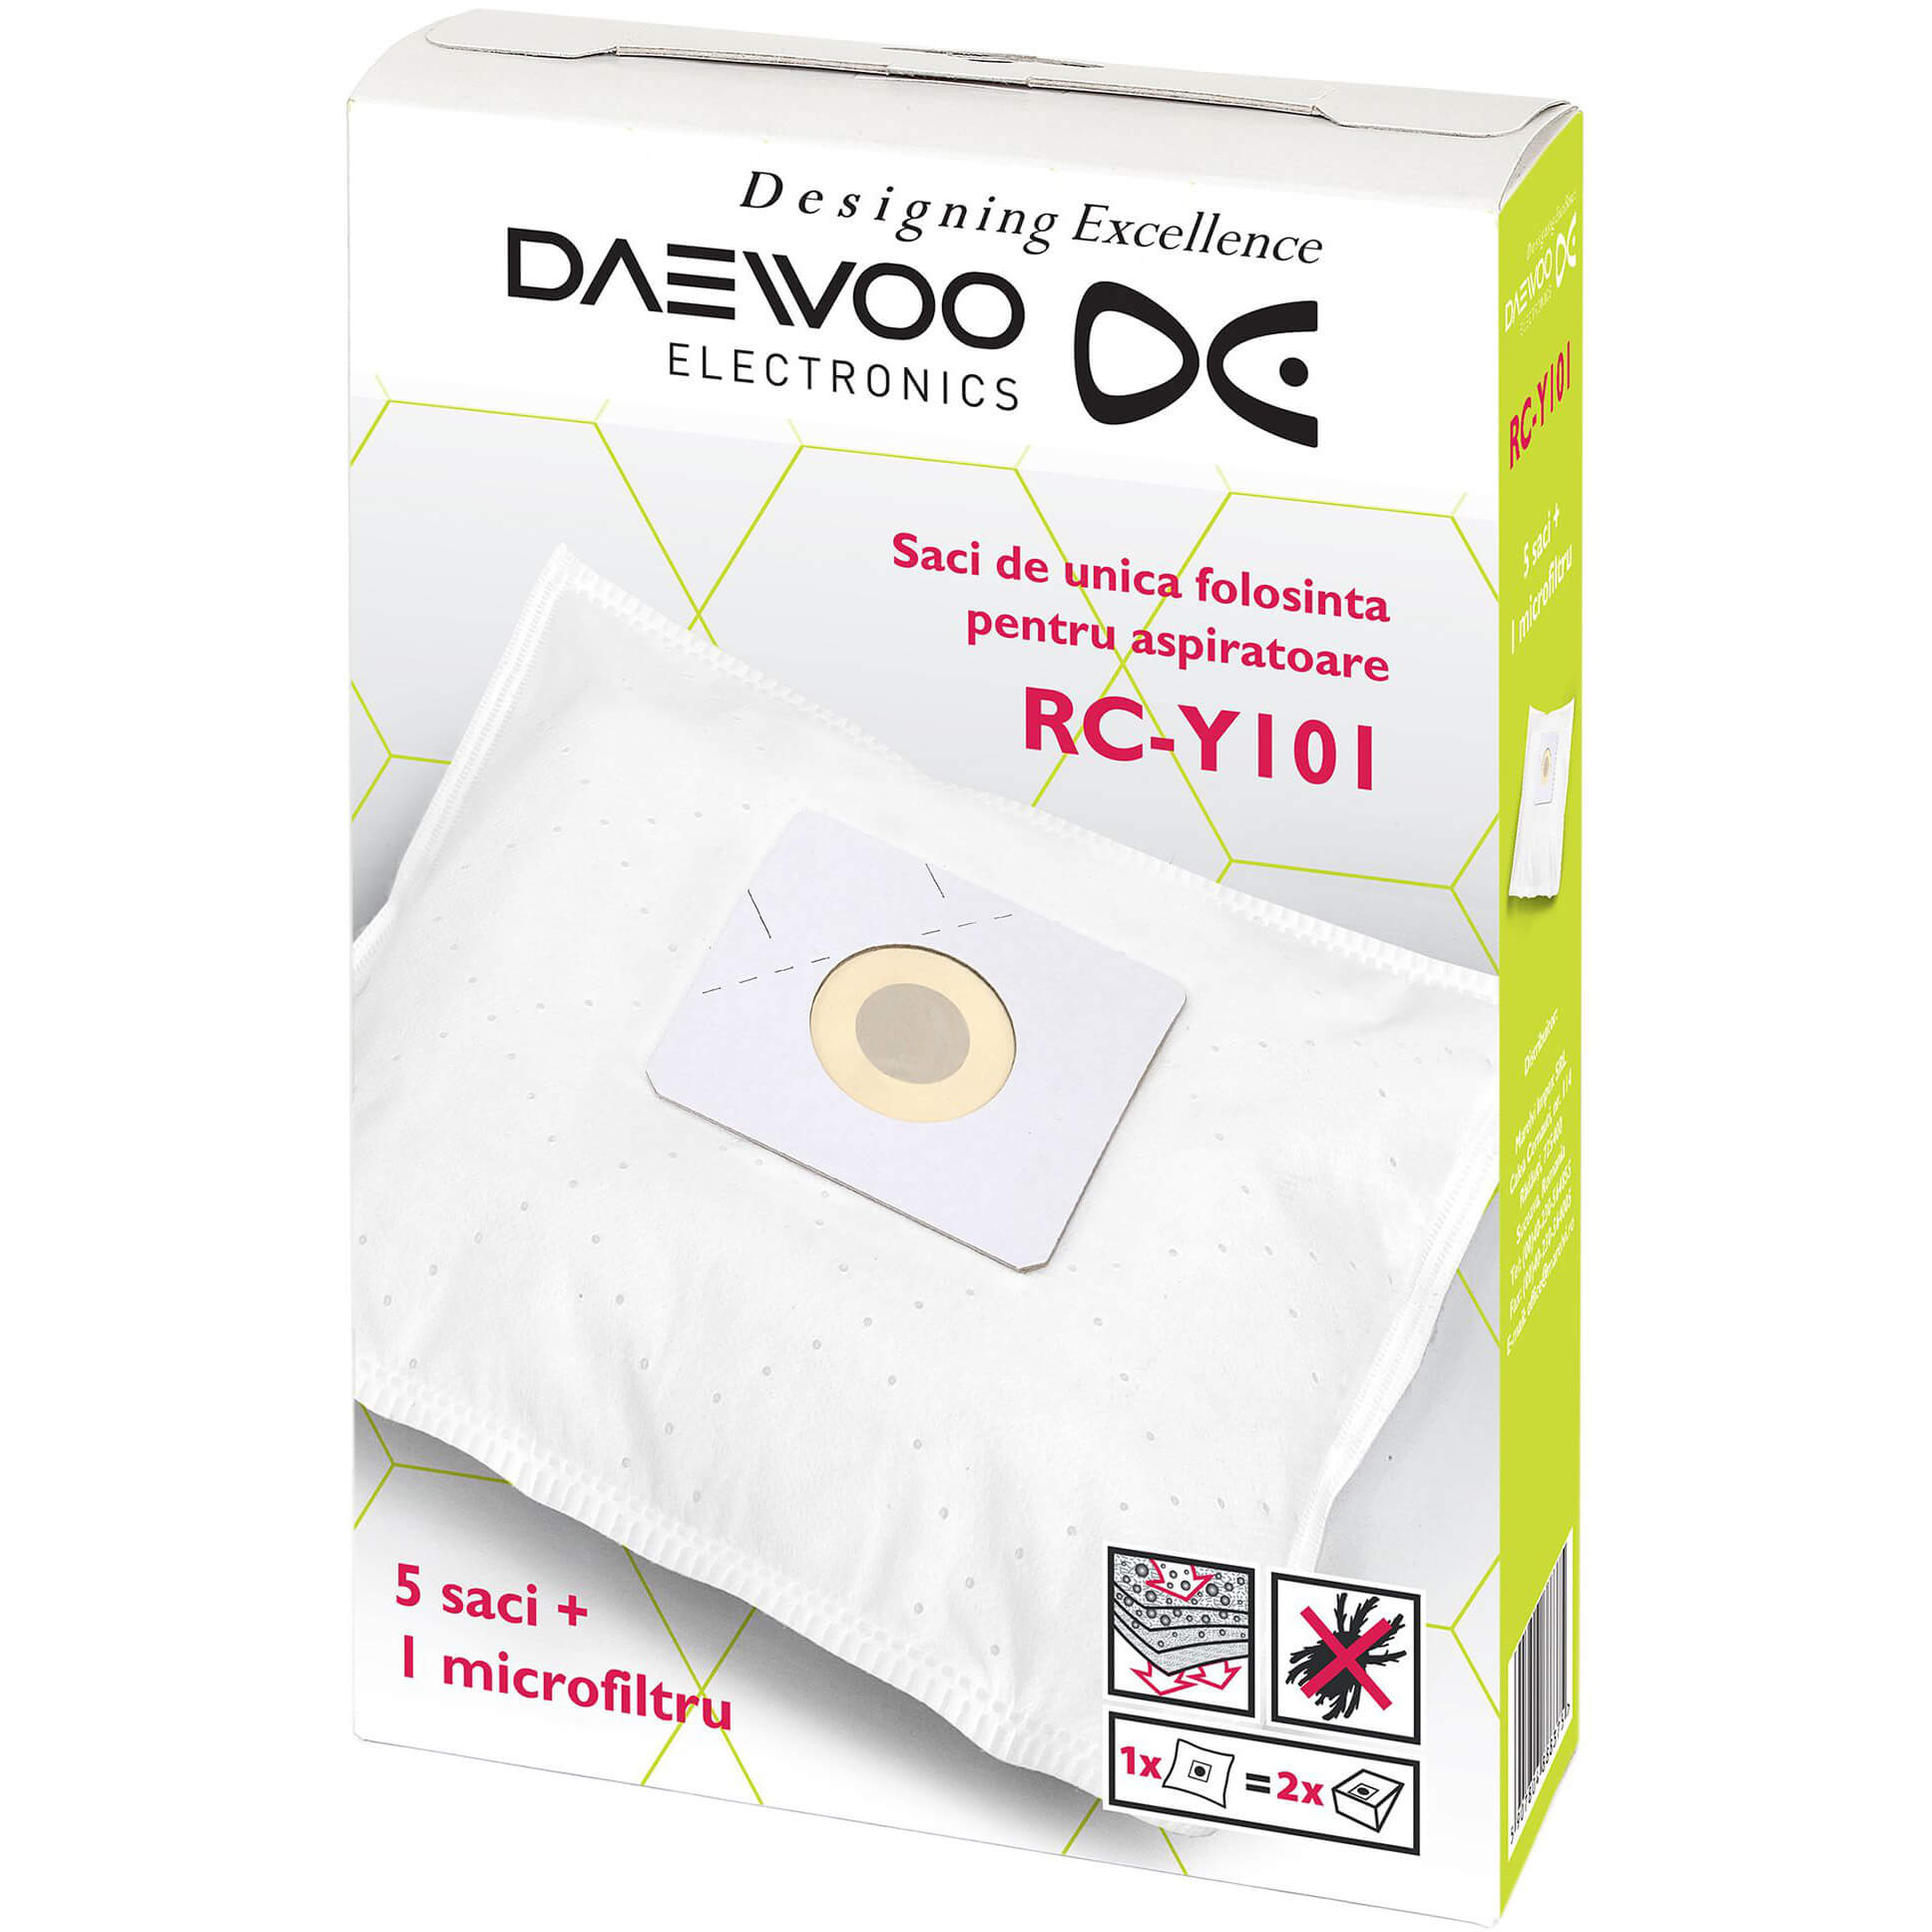  Set saci de aspirator + 1 microfiltru Daewoo RC-Y101 